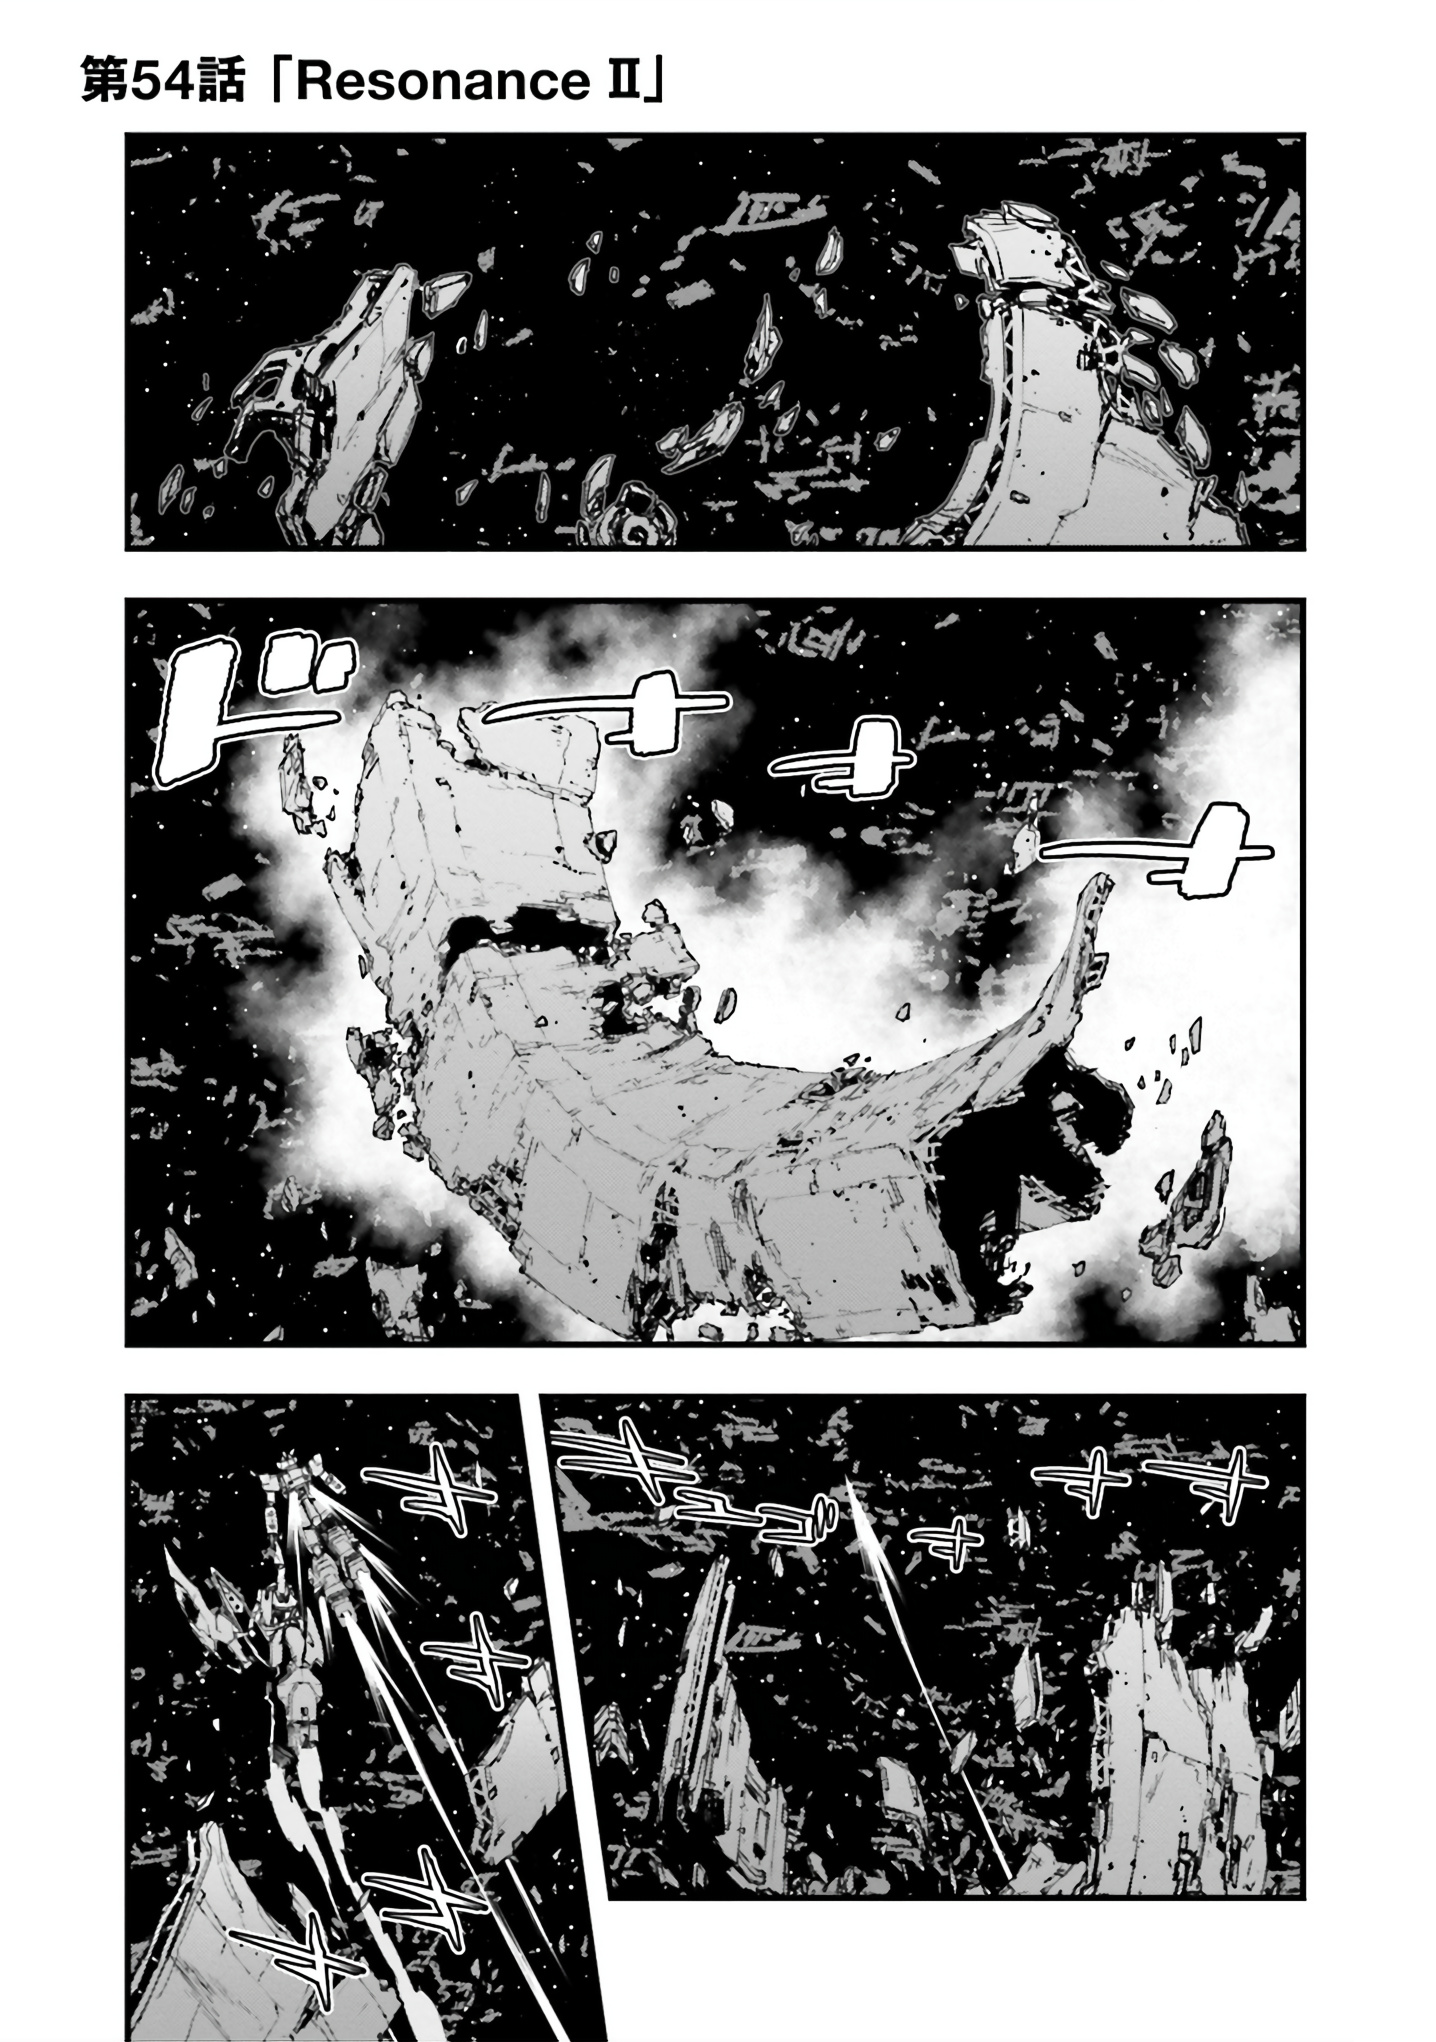 Mobile Suit Gundam Walpurgis Vol.10 Chapter 54: Resonance Ii - Picture 1